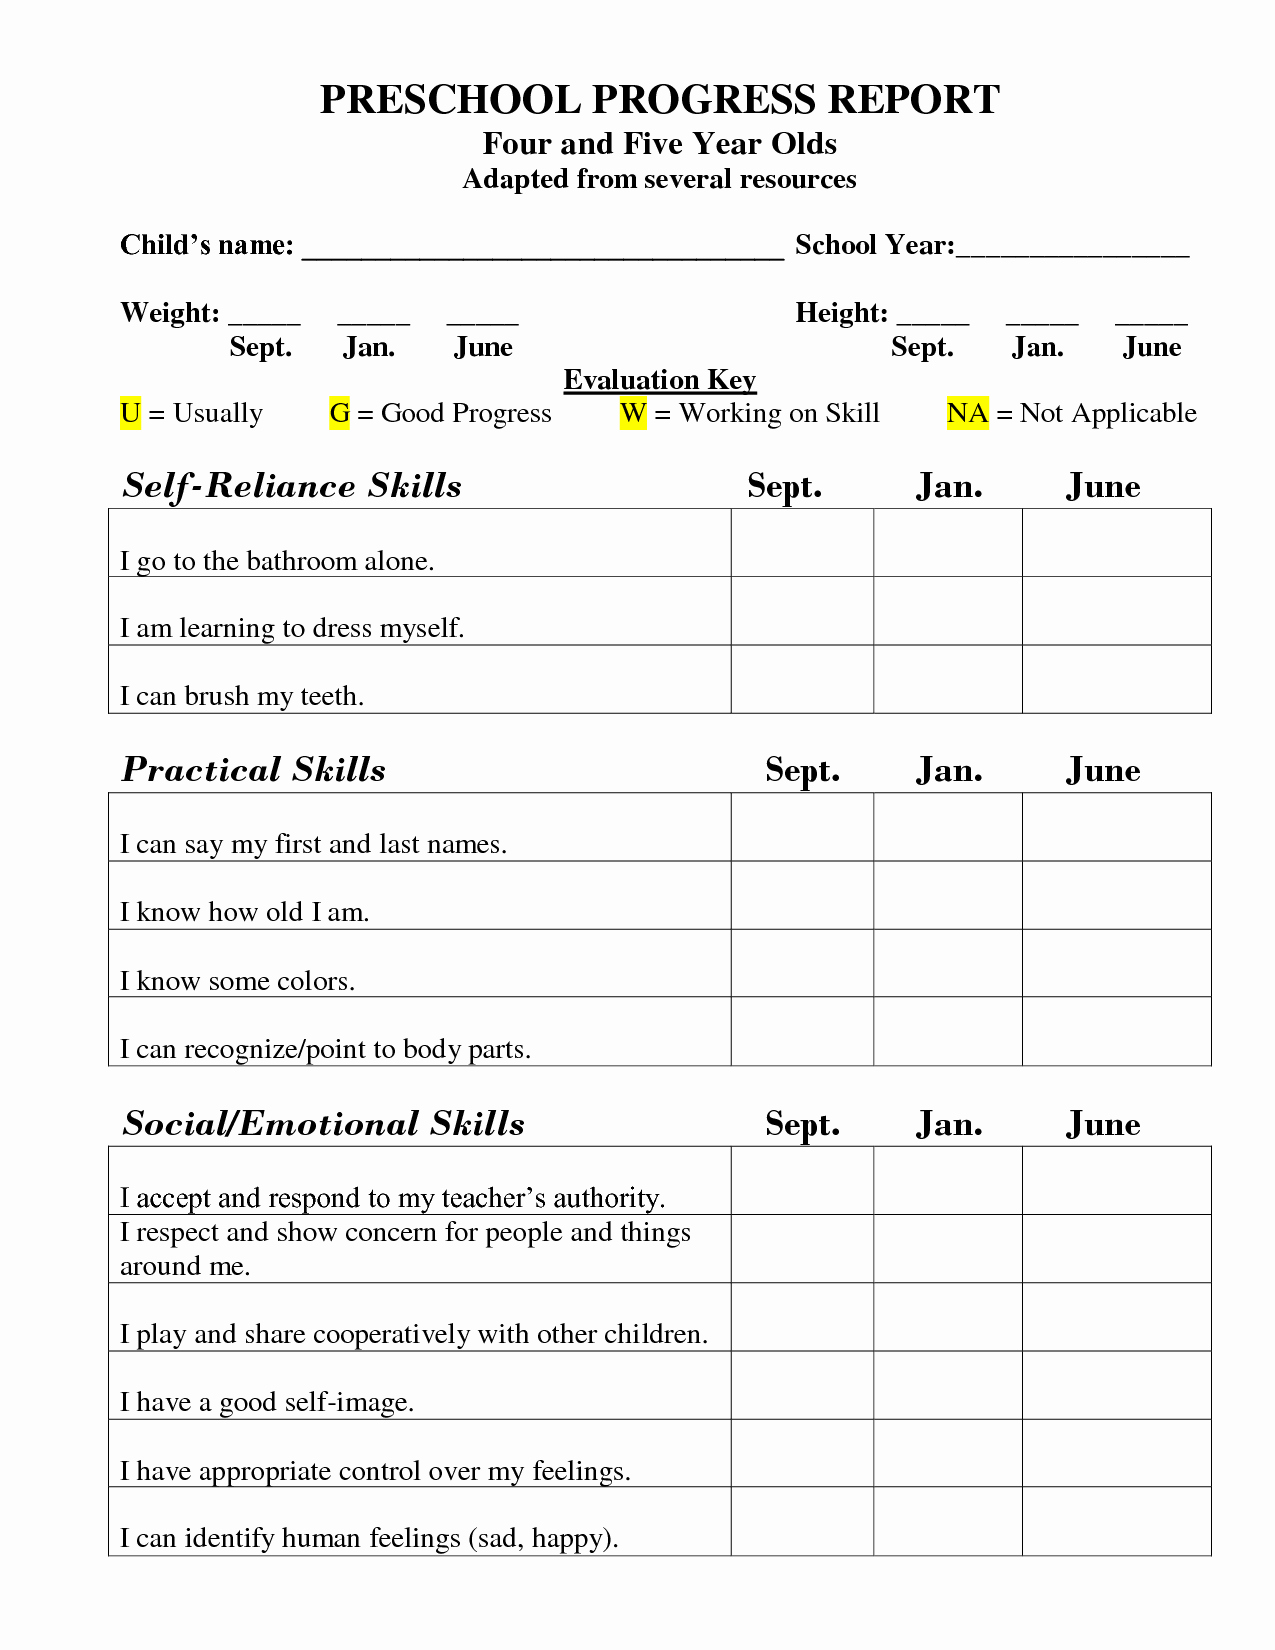 Kindergarten Progress Report Template New Nursery Daily forms Preschool Progress Report Doc Child Preschool Pinterest